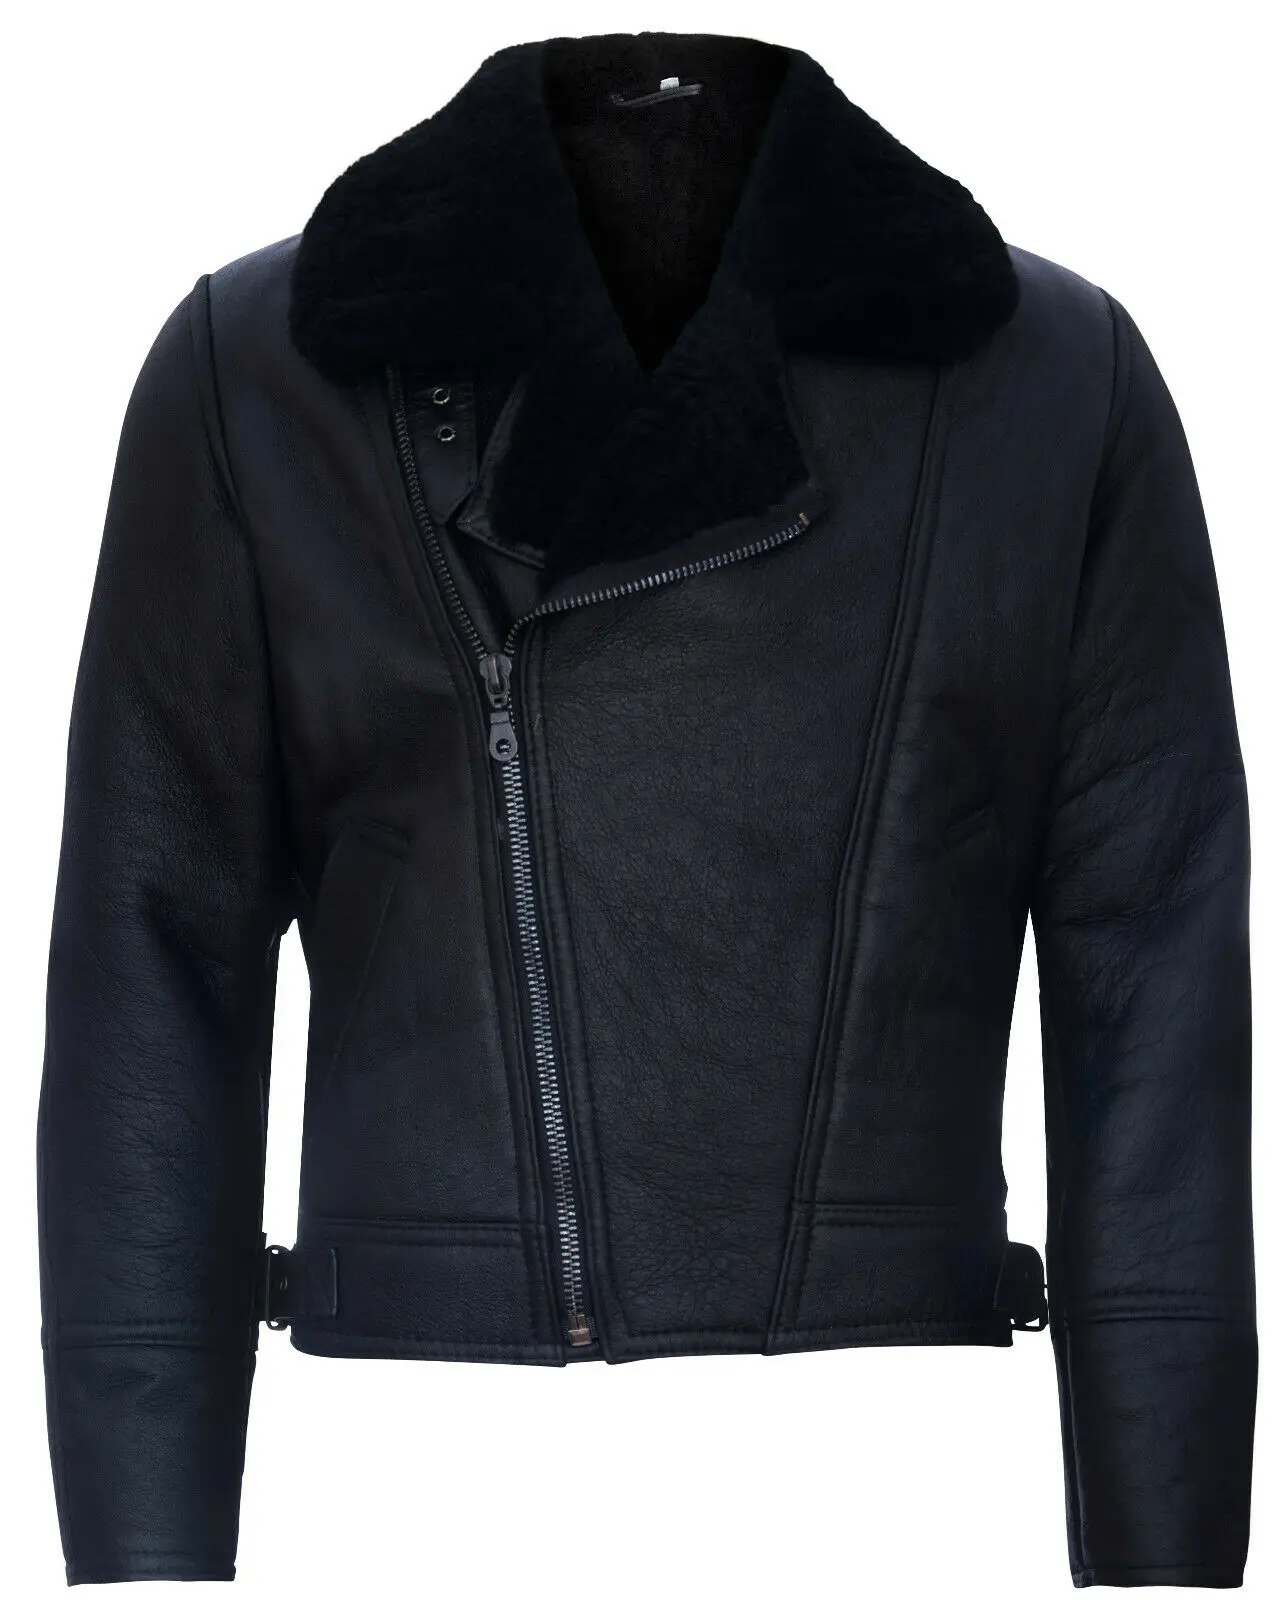 Men’s Aviator Black Leather Shearling Jacket